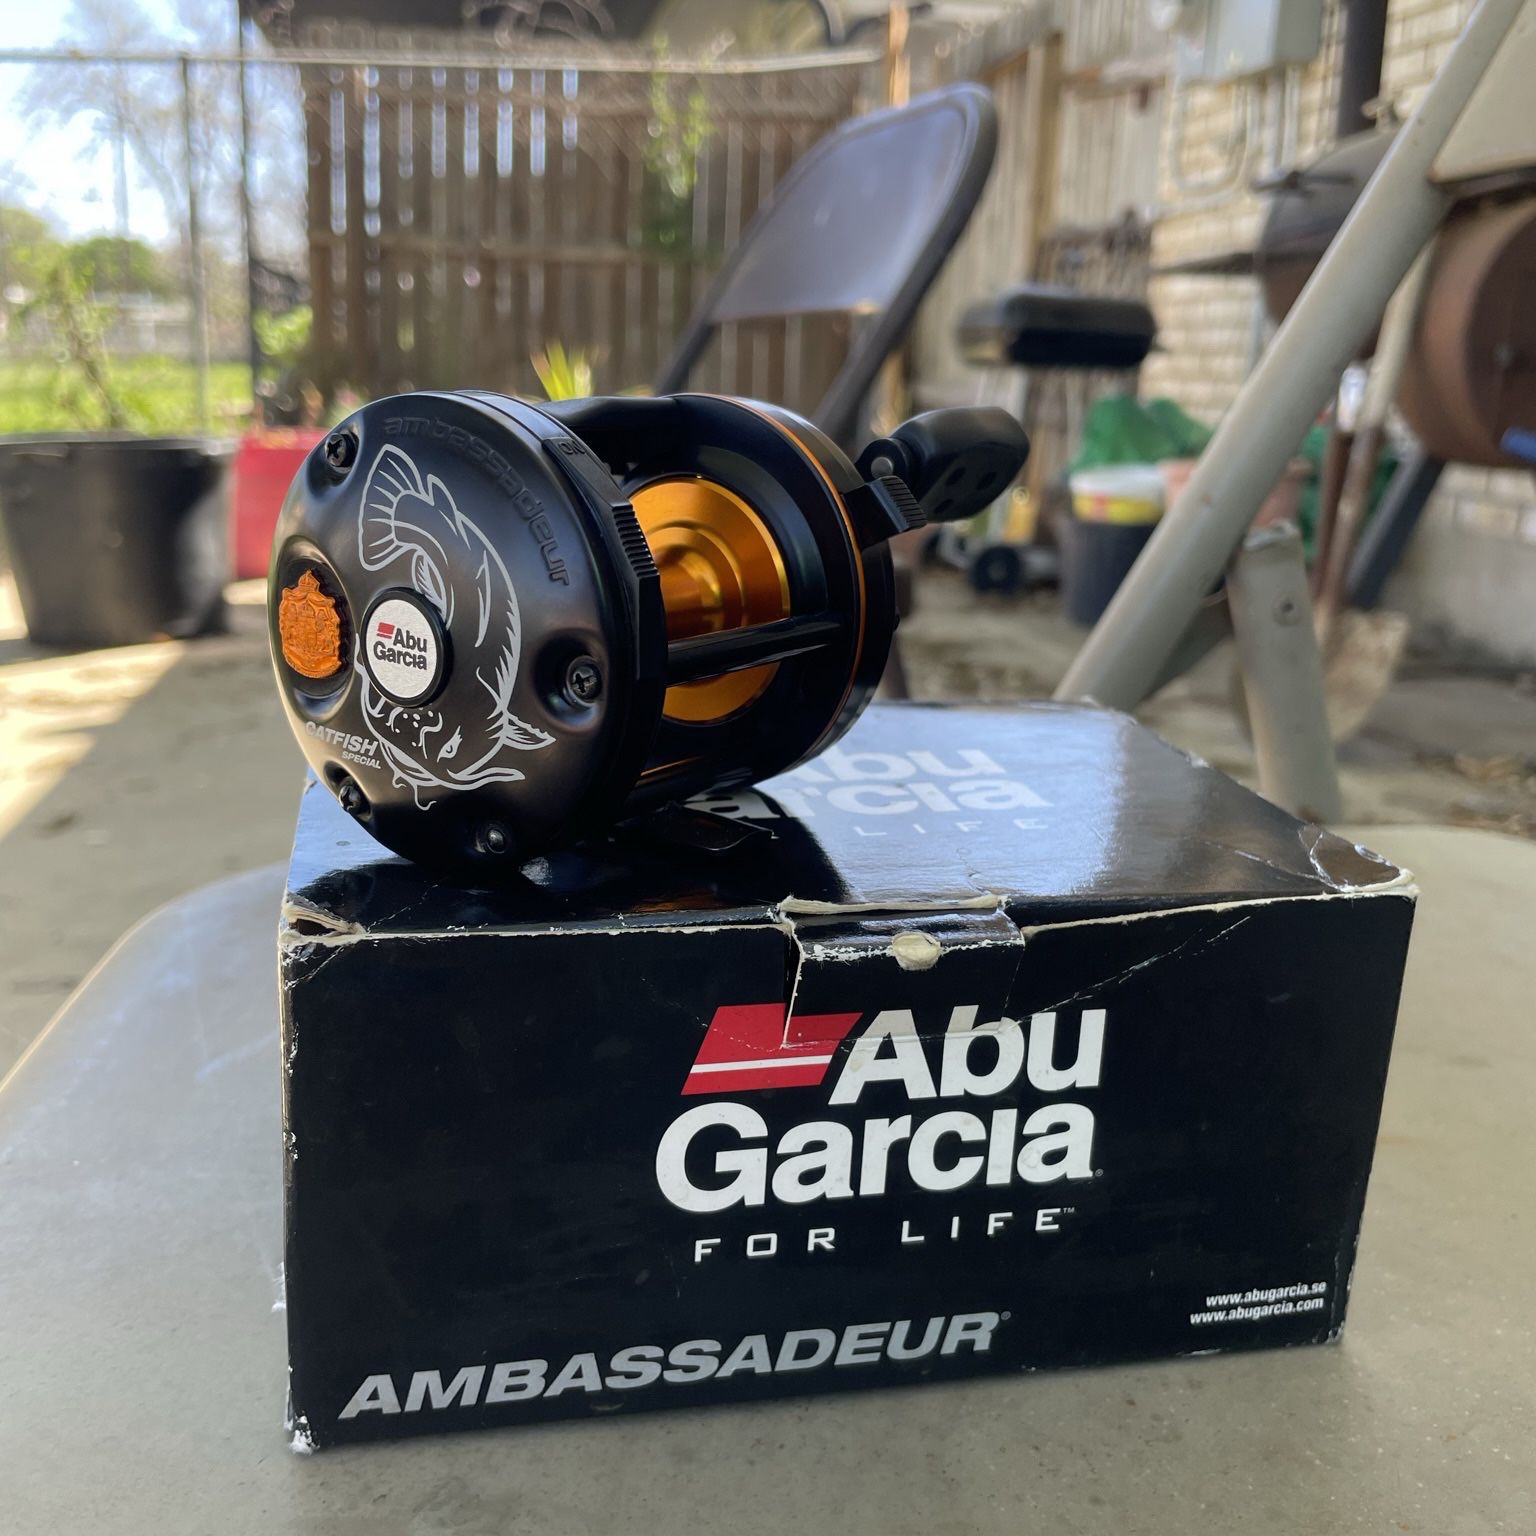 Abu Garcia Ambassadeur Catfish Special 6500 C3 for Sale in San